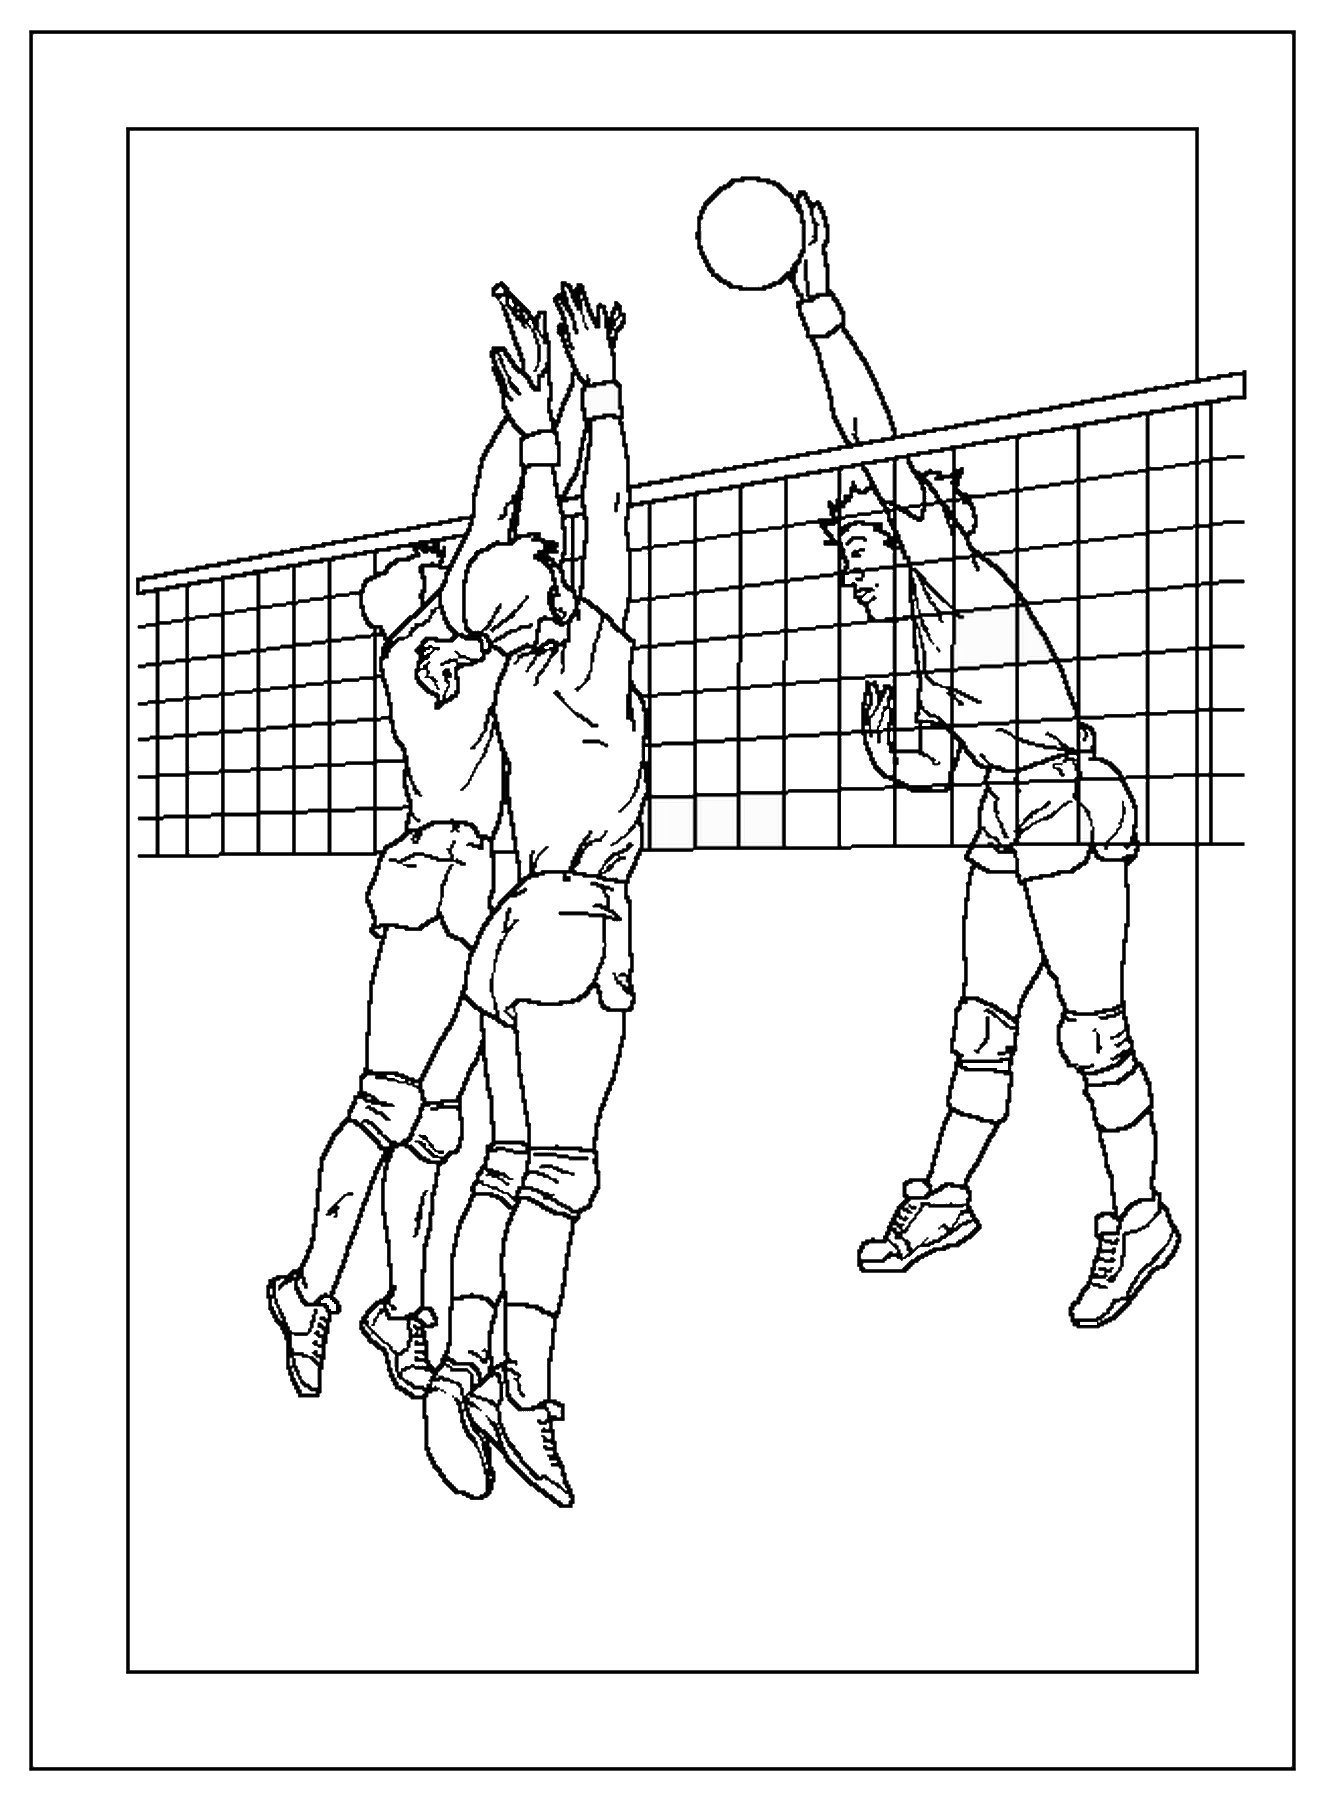 Рисунок на тему волейбол карандашом